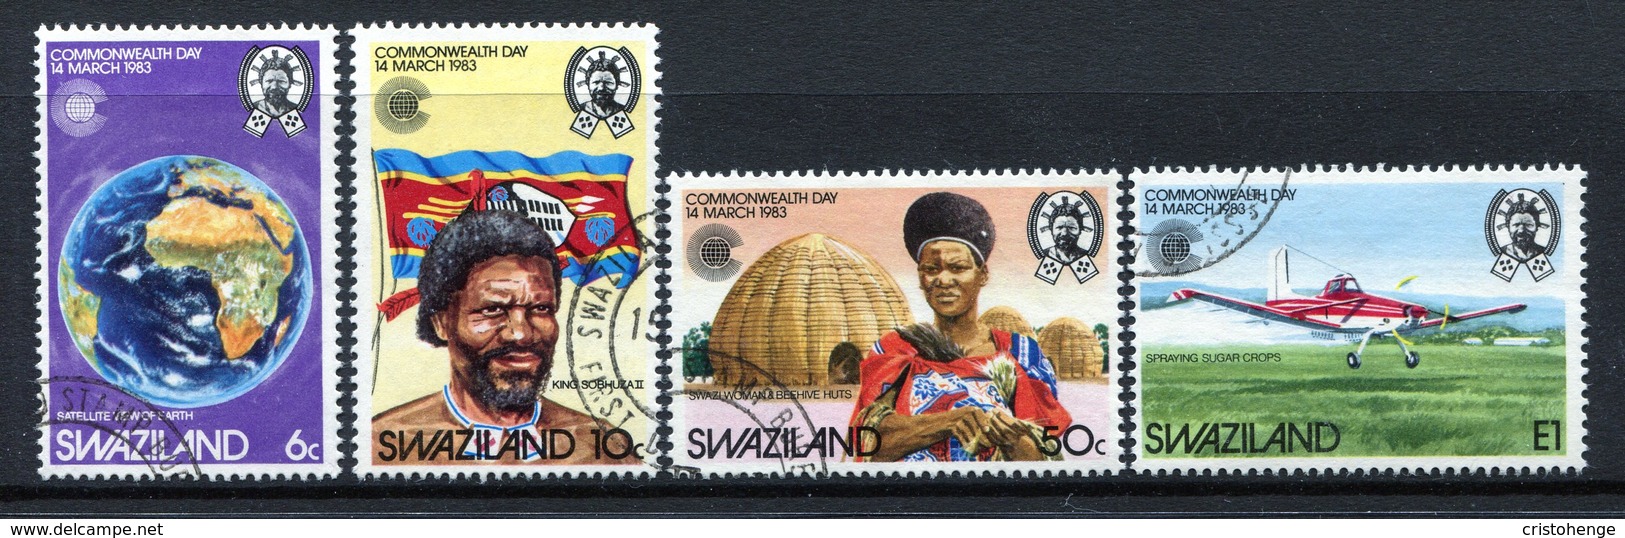 Swaziland 1983 Commonwealth Day Set Used (SG 421-424) - Swaziland (1968-...)